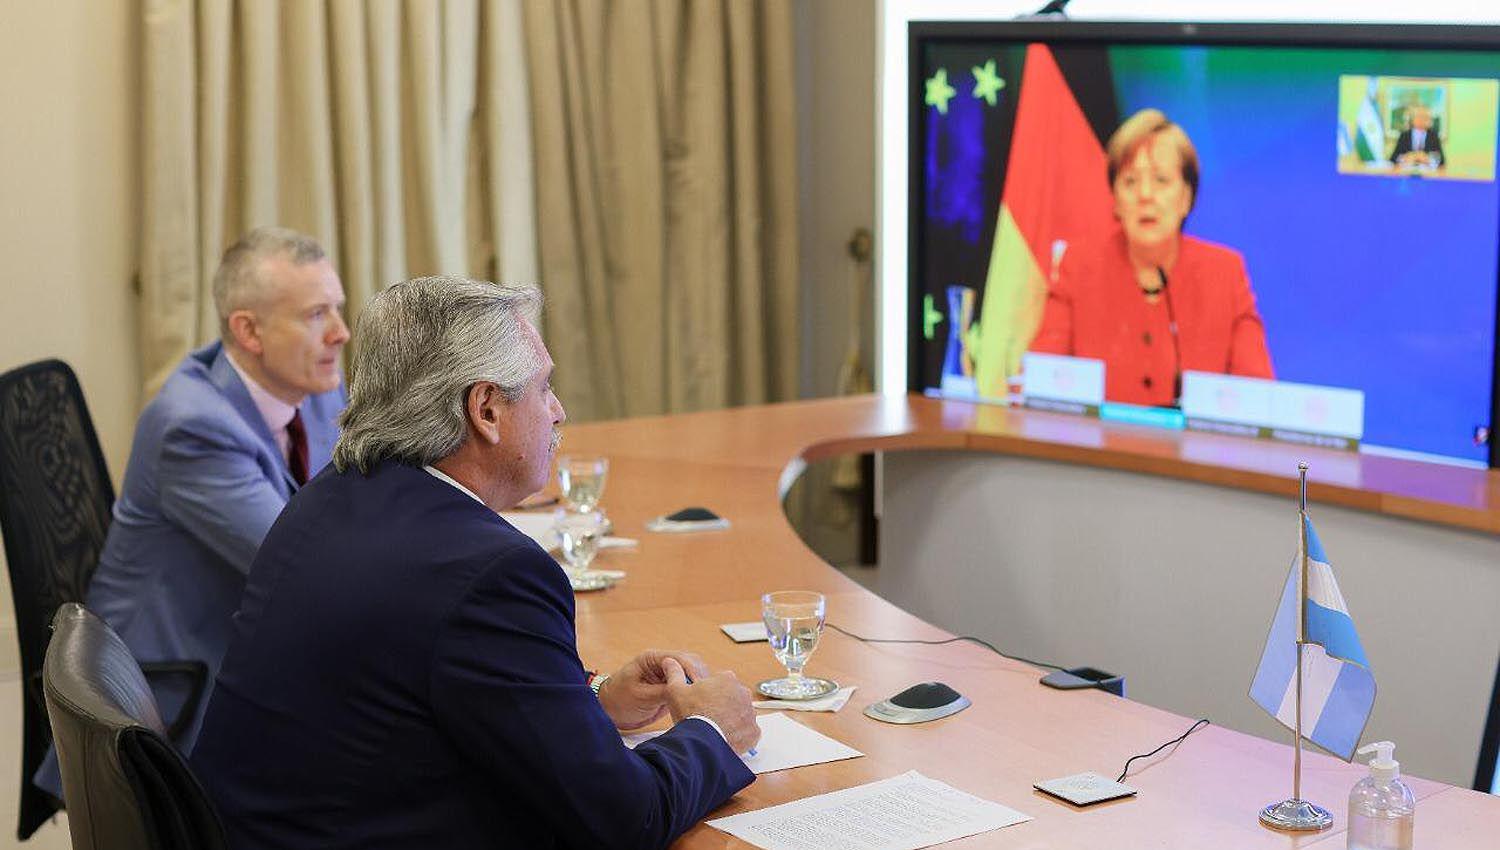 El presidente Fernaacutendez dialogoacute con la canciller alemana aacutengela Merkel